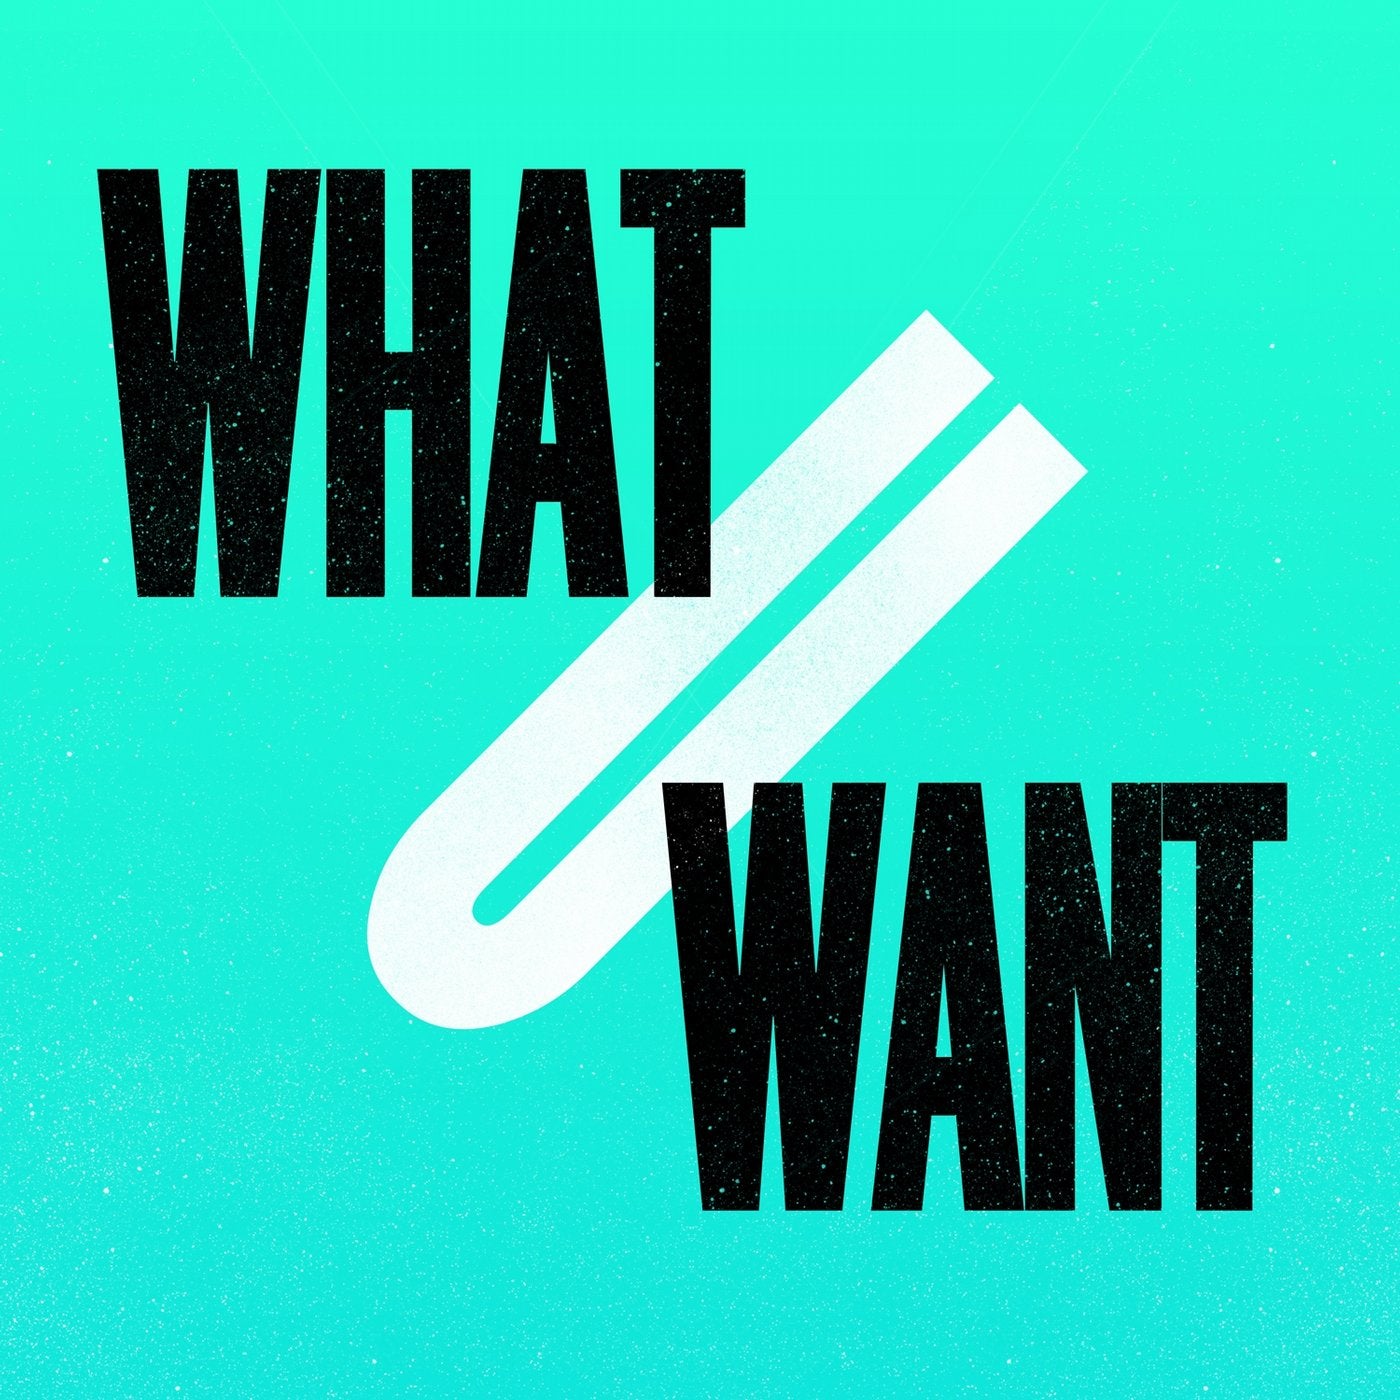 What U Want (2017 Remixes)